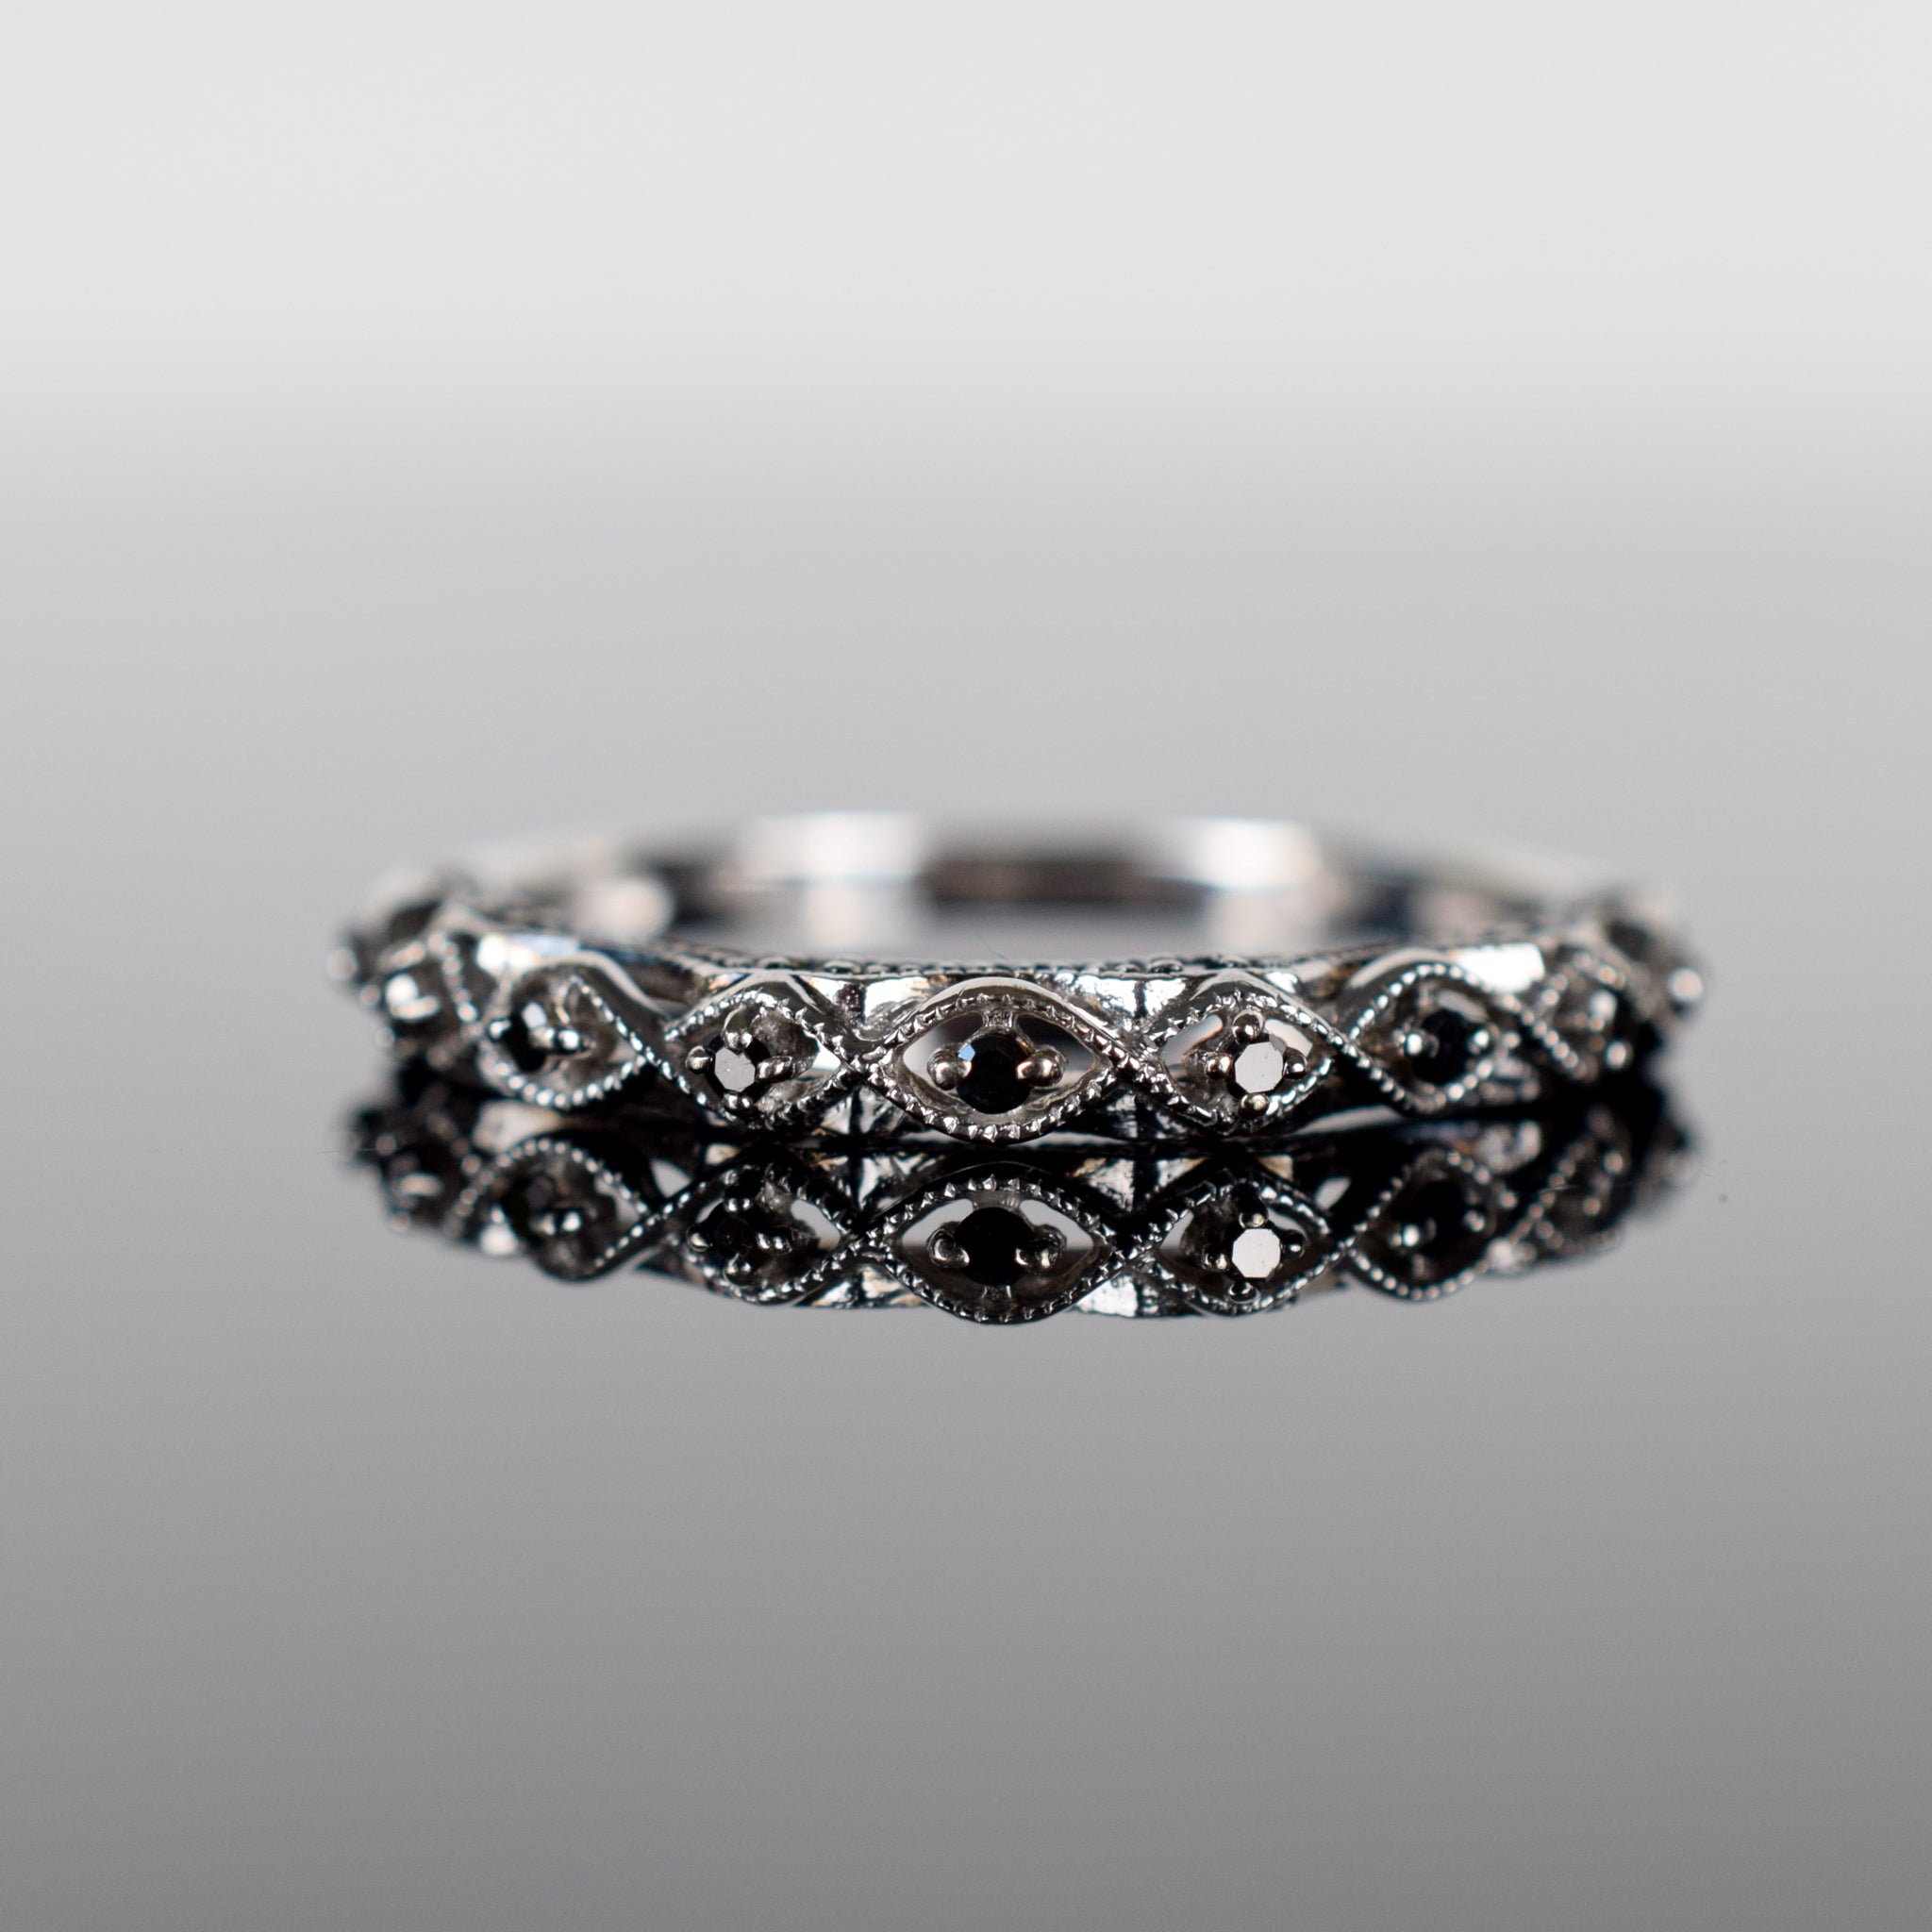 Vintage black diamond ring, folklor